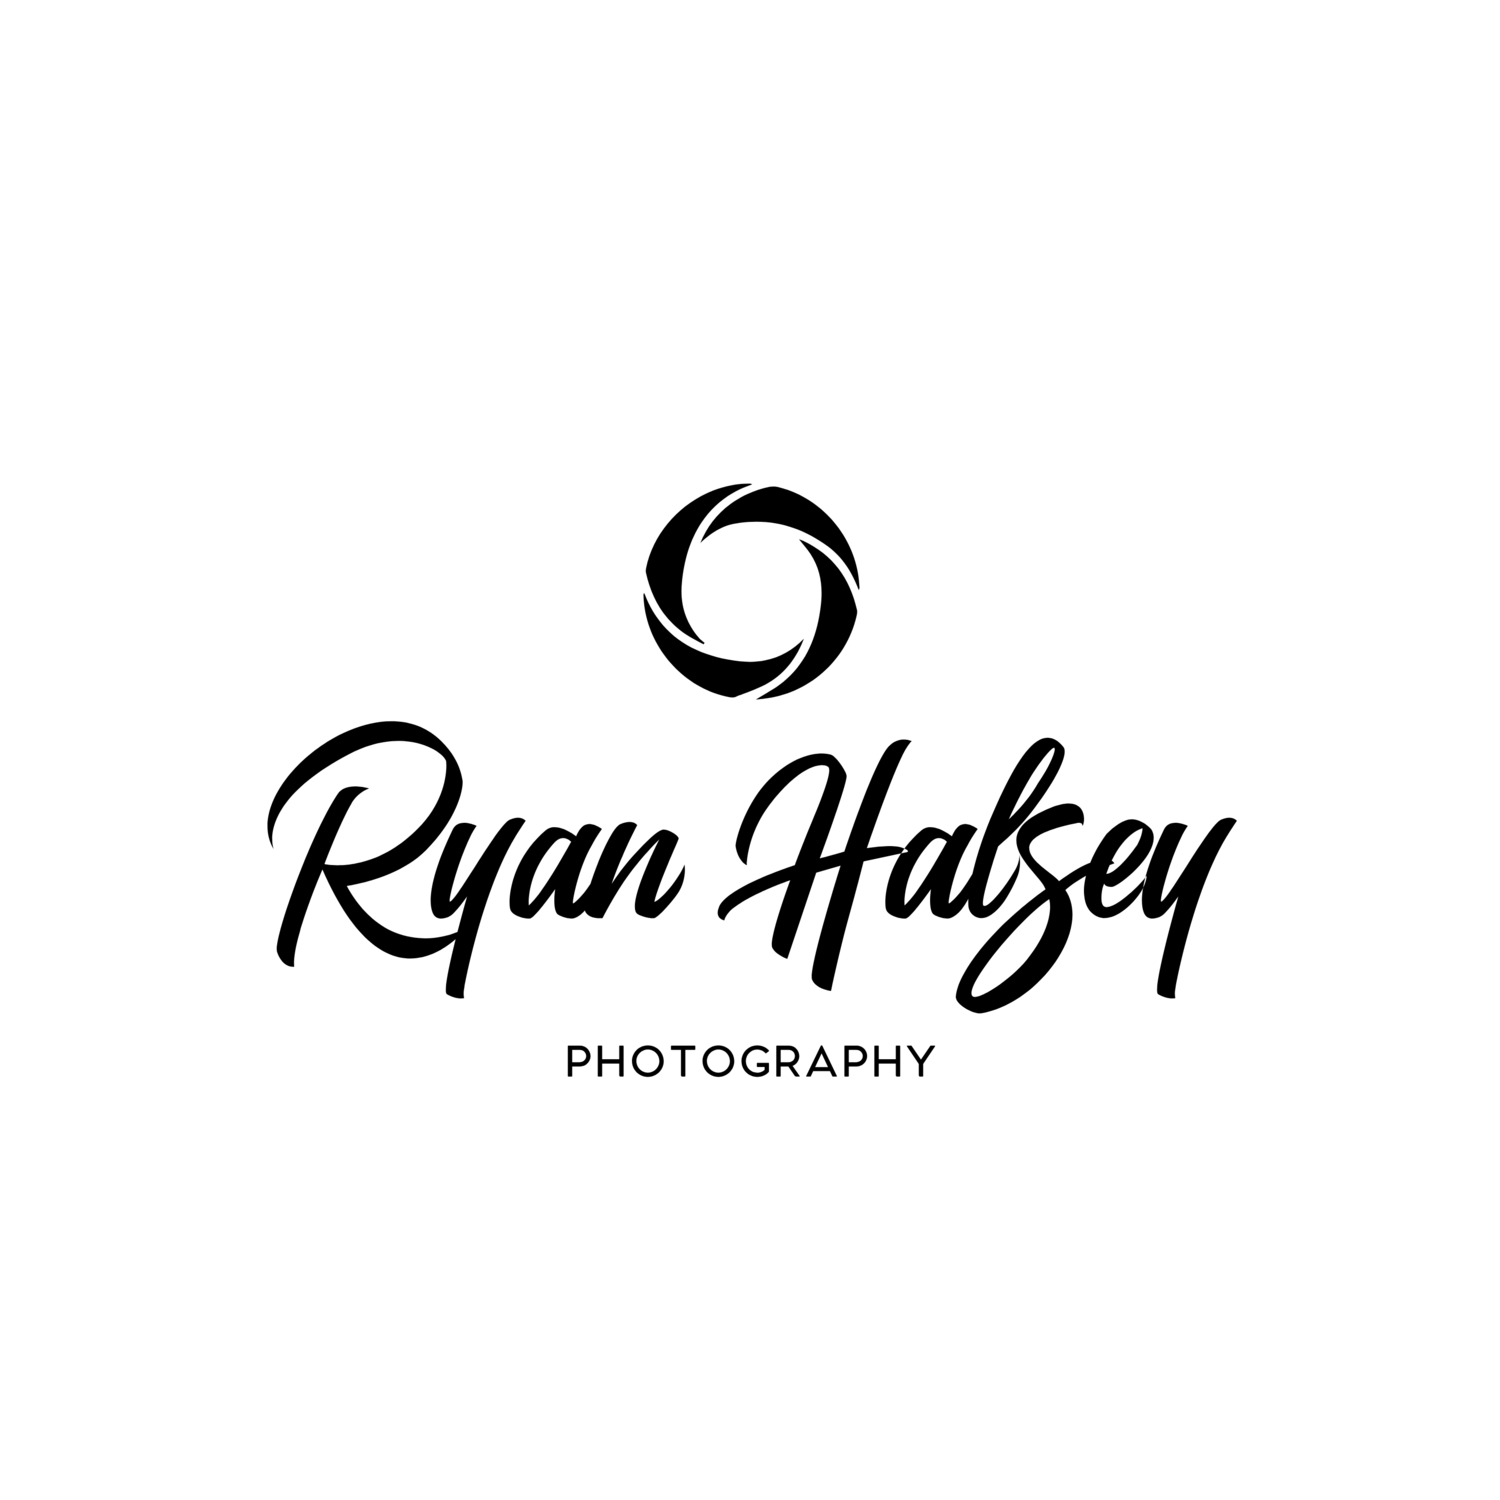 Ryan Halsey Photography